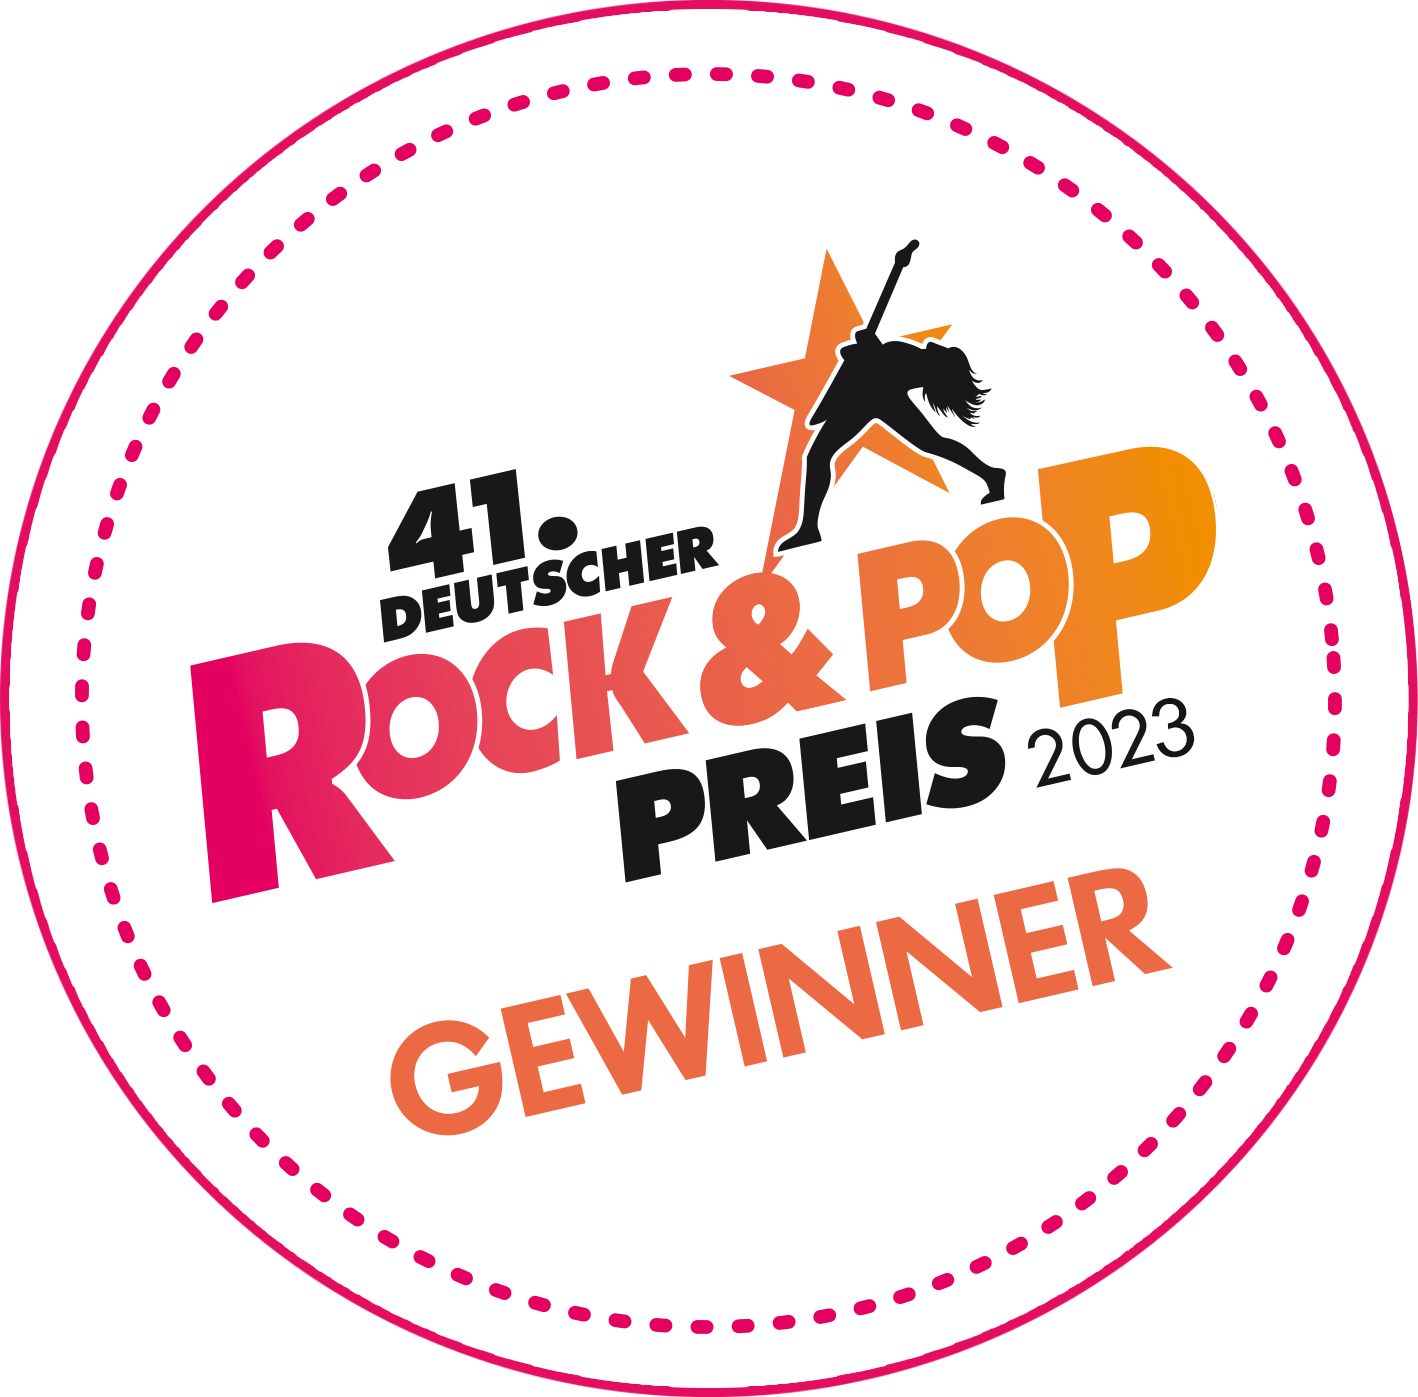 41. Rock & Pop Preis Gewinner